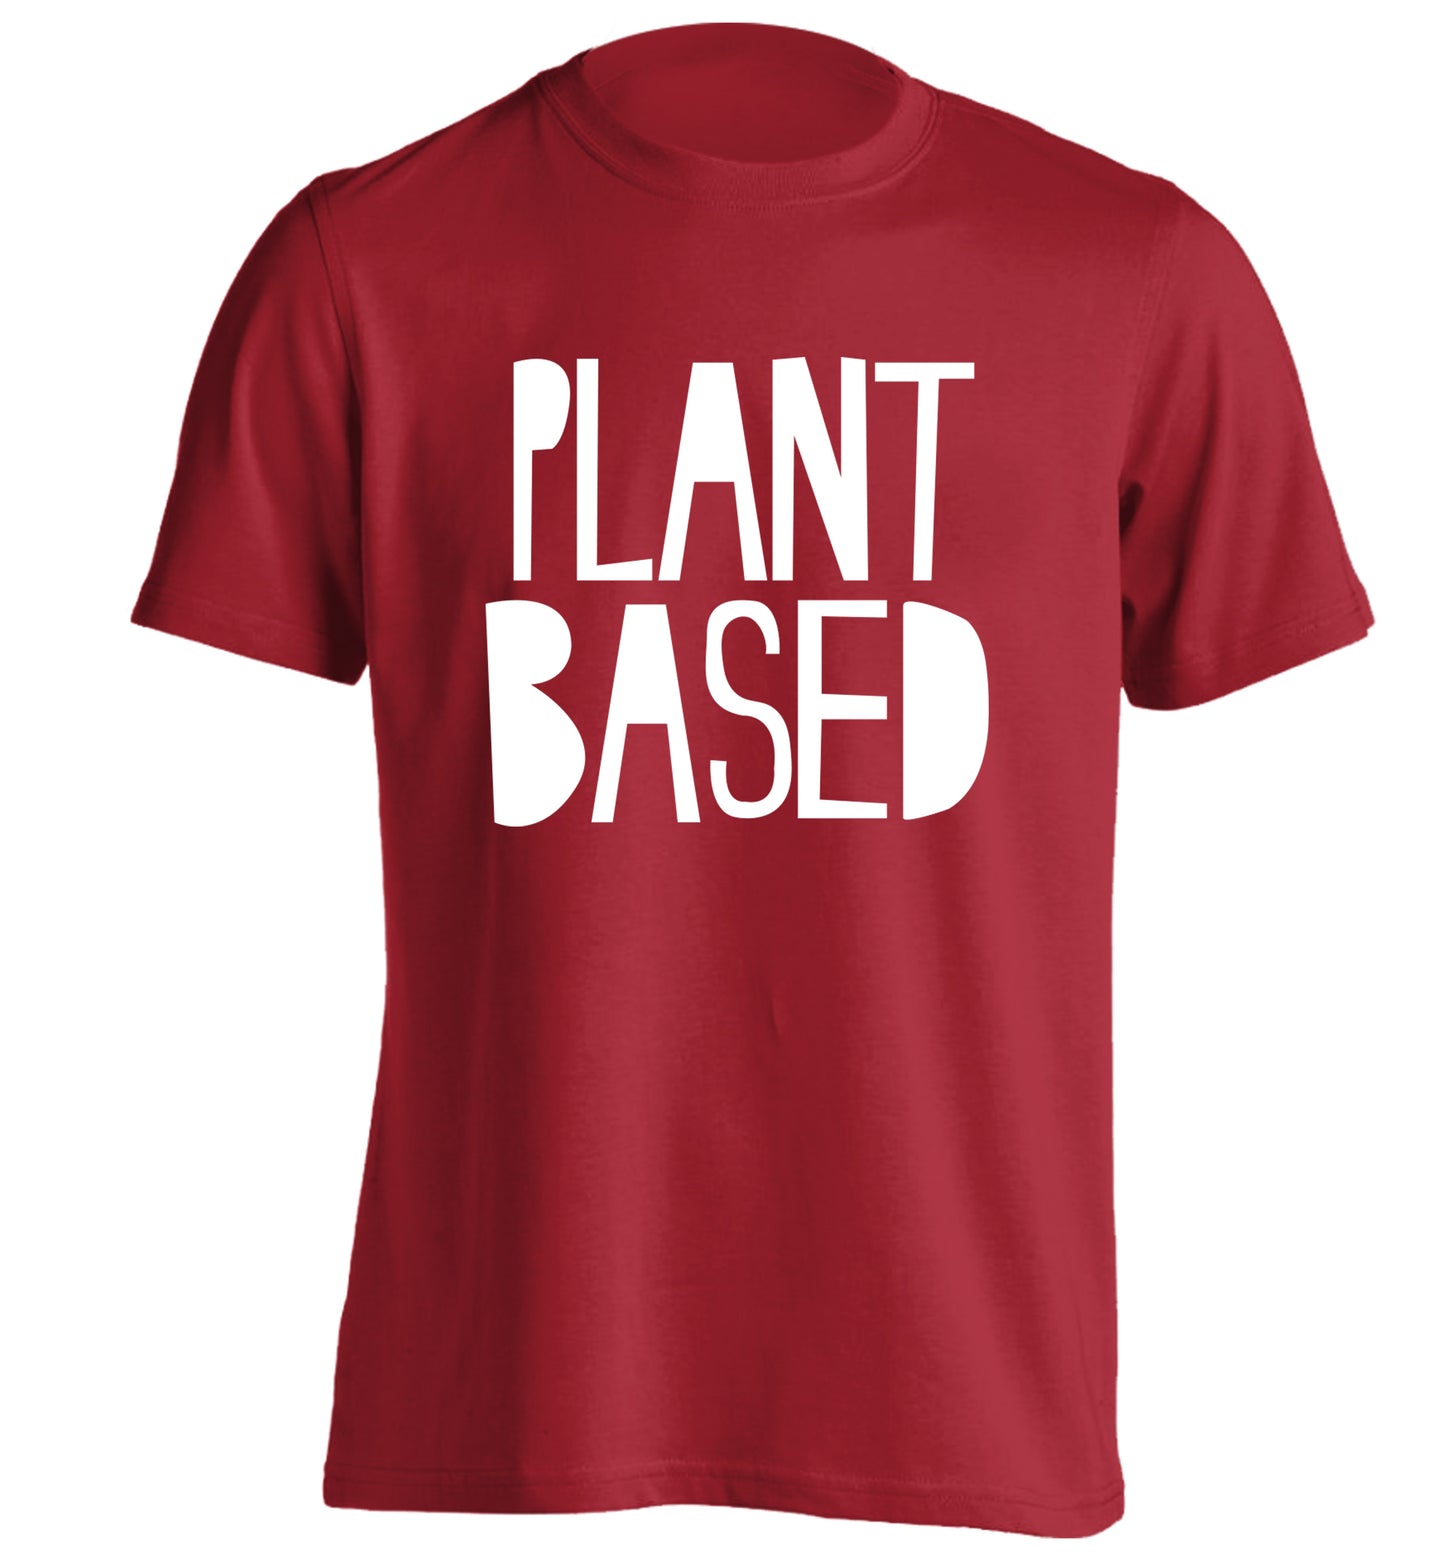 Plant Based adults unisex red Tshirt 2XL